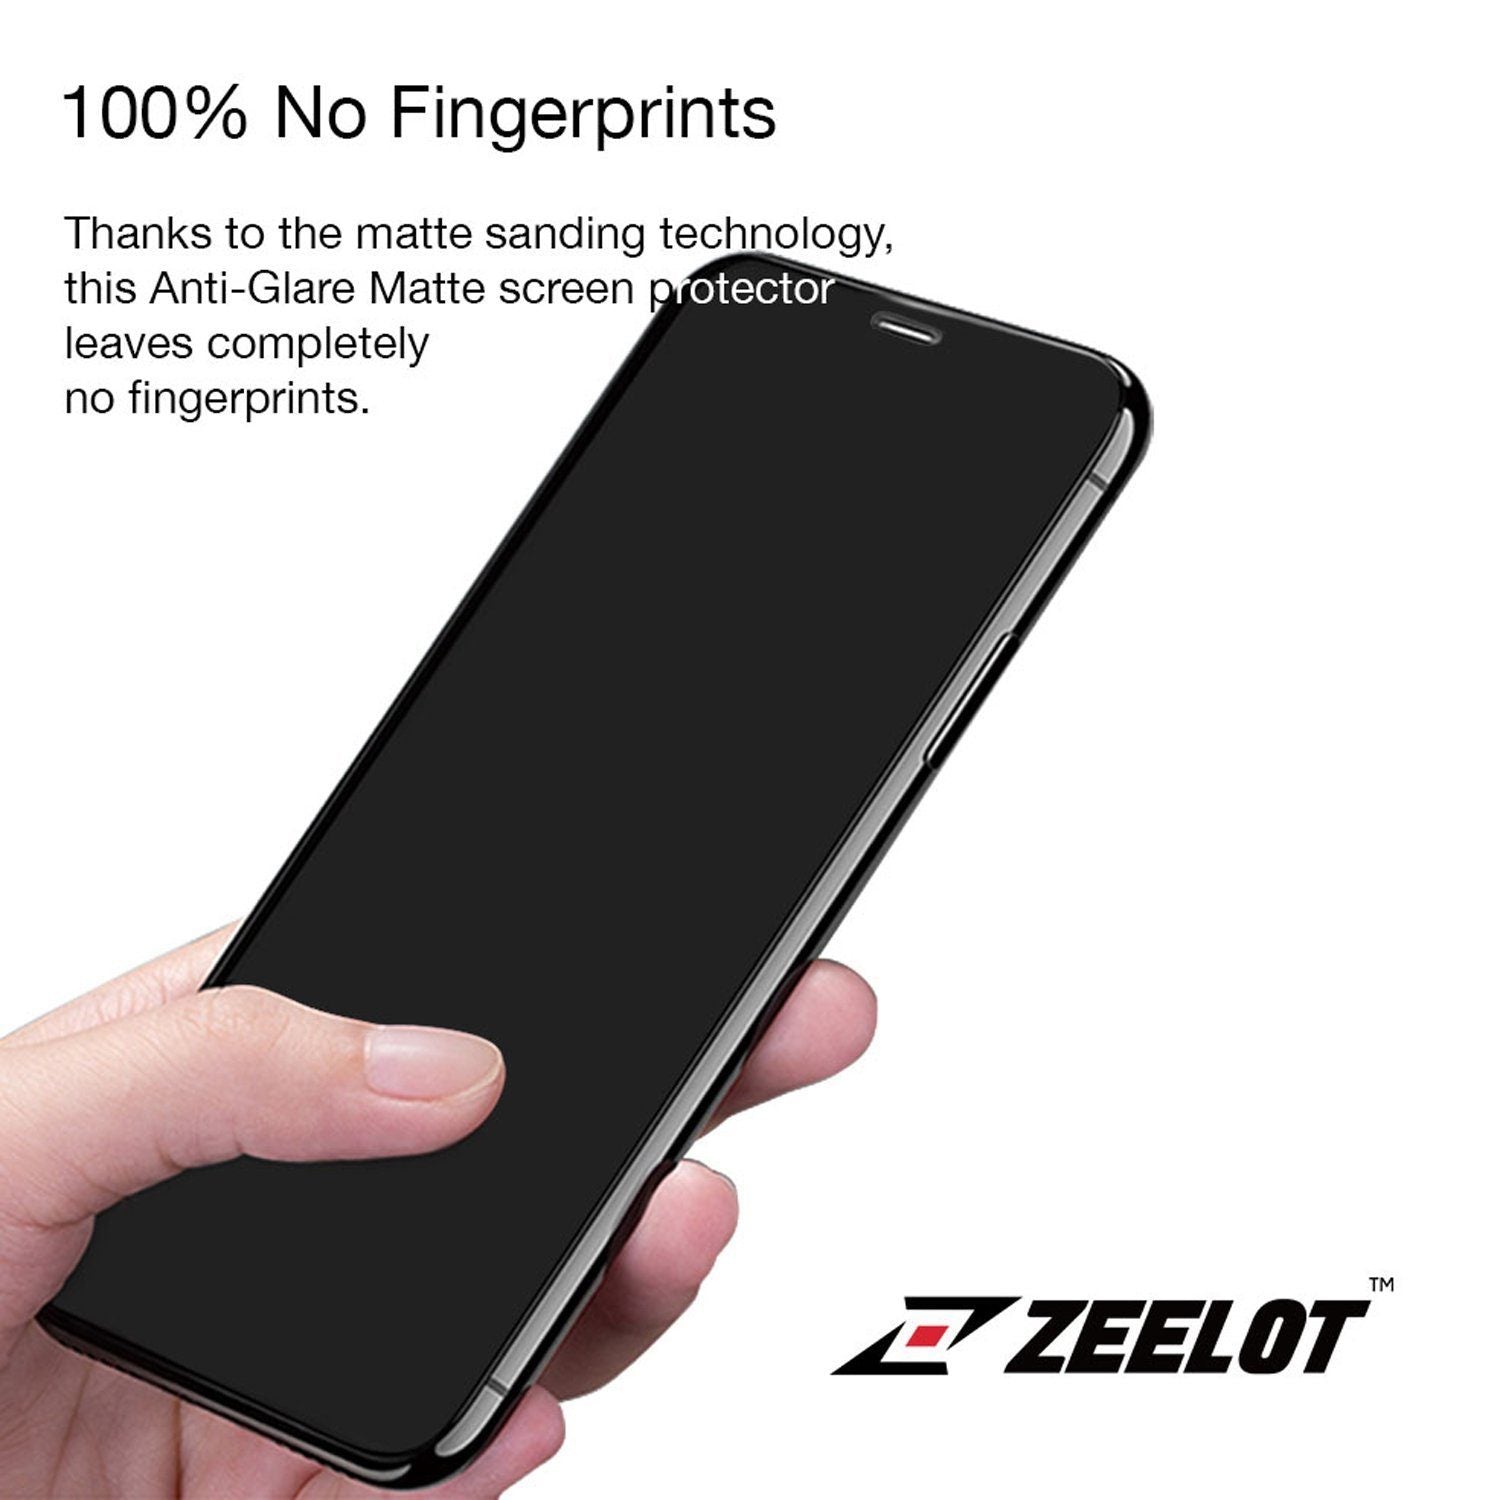 ZEELOT PureGlass 2.5D Tempered Glass Screen Protector for Huawei Mate 20 (2018), Clear Tempered Glass ZEELOT 